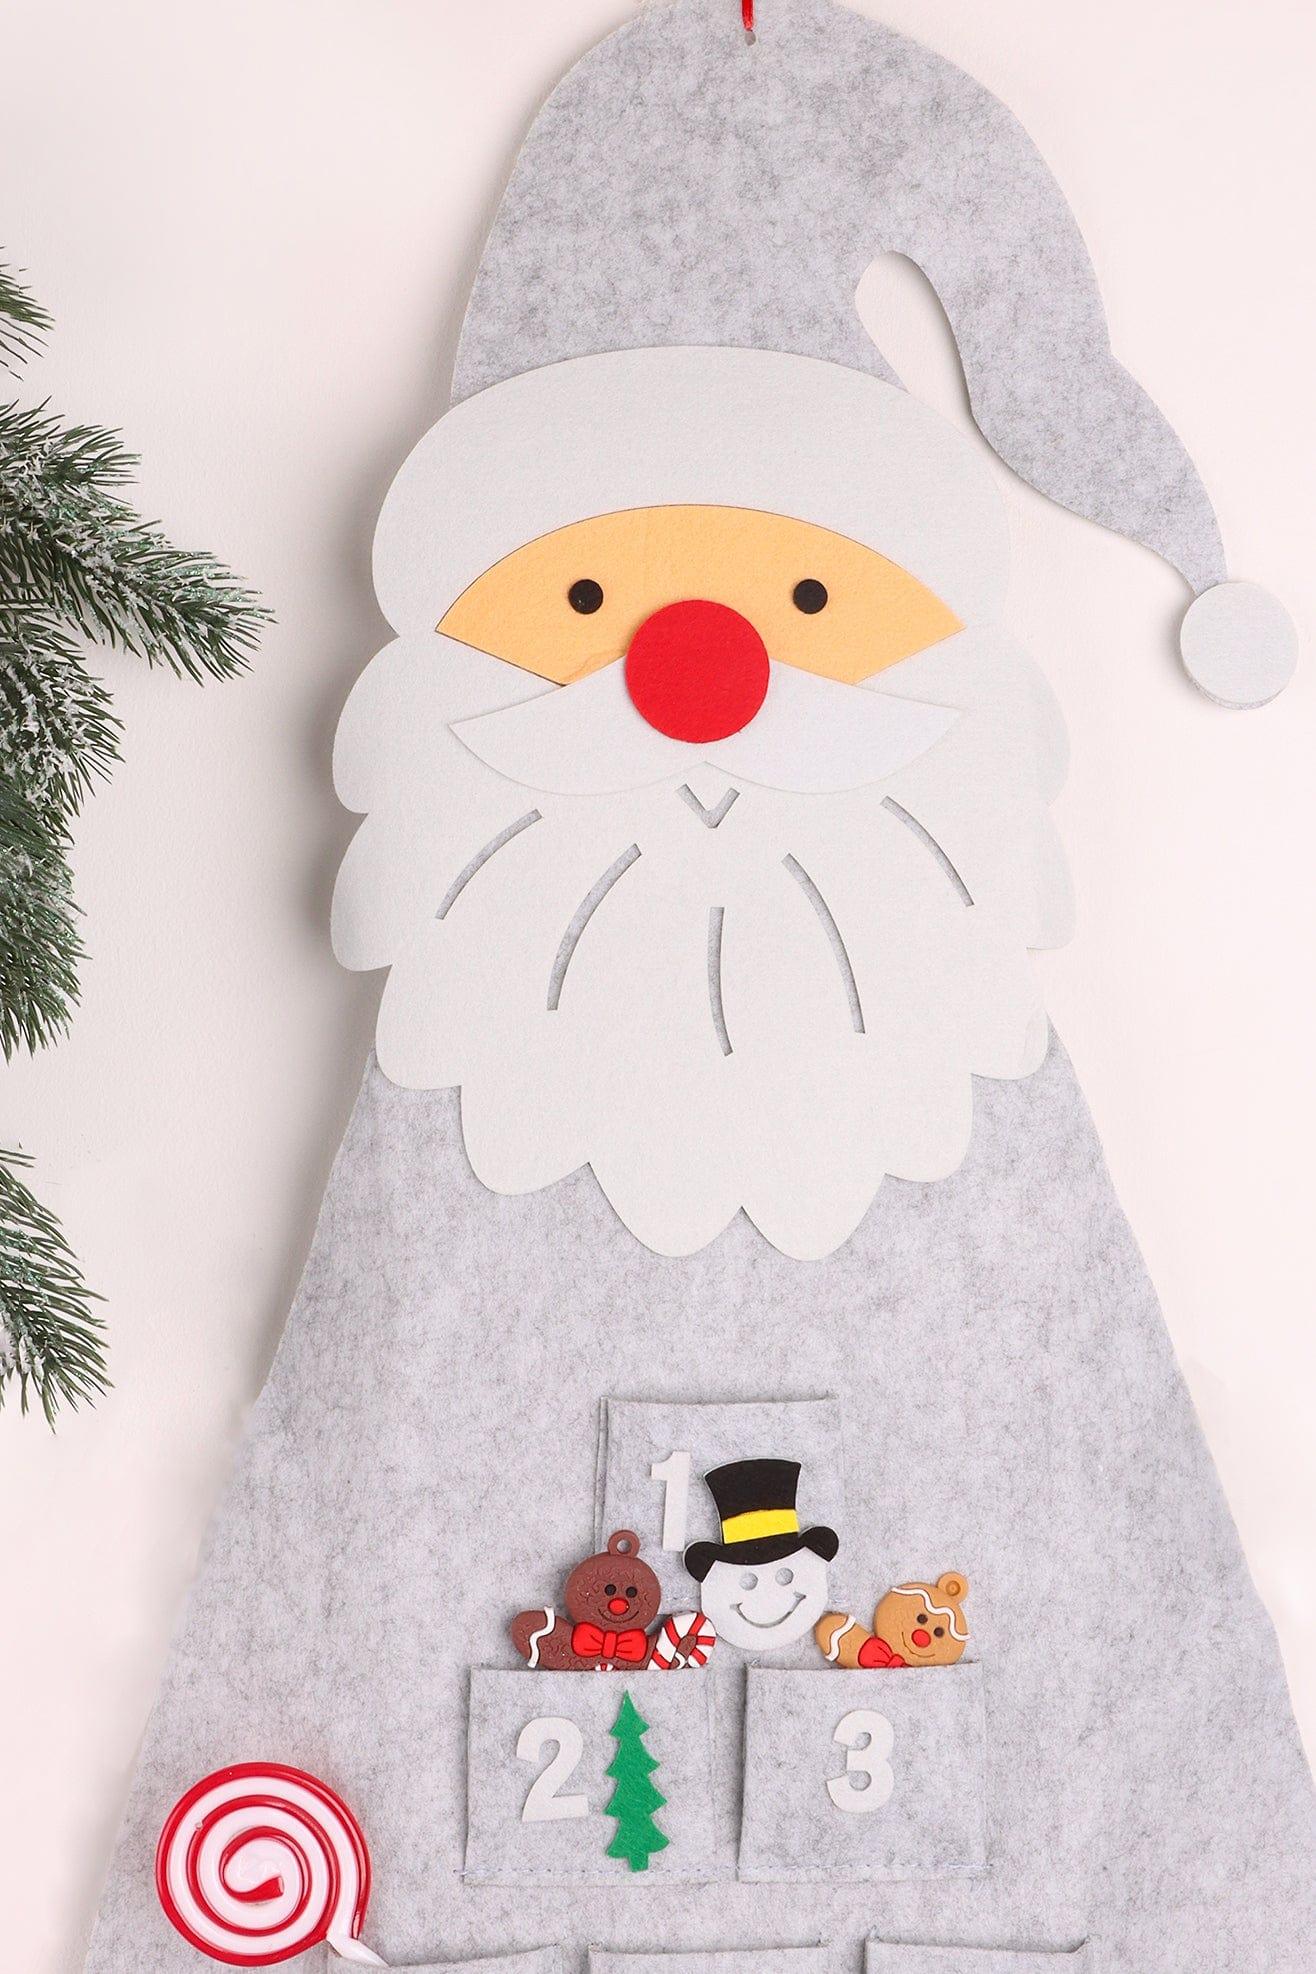 G Decor Christmas Decorations Grey Large Grey Santa Reusable Advent Calendar